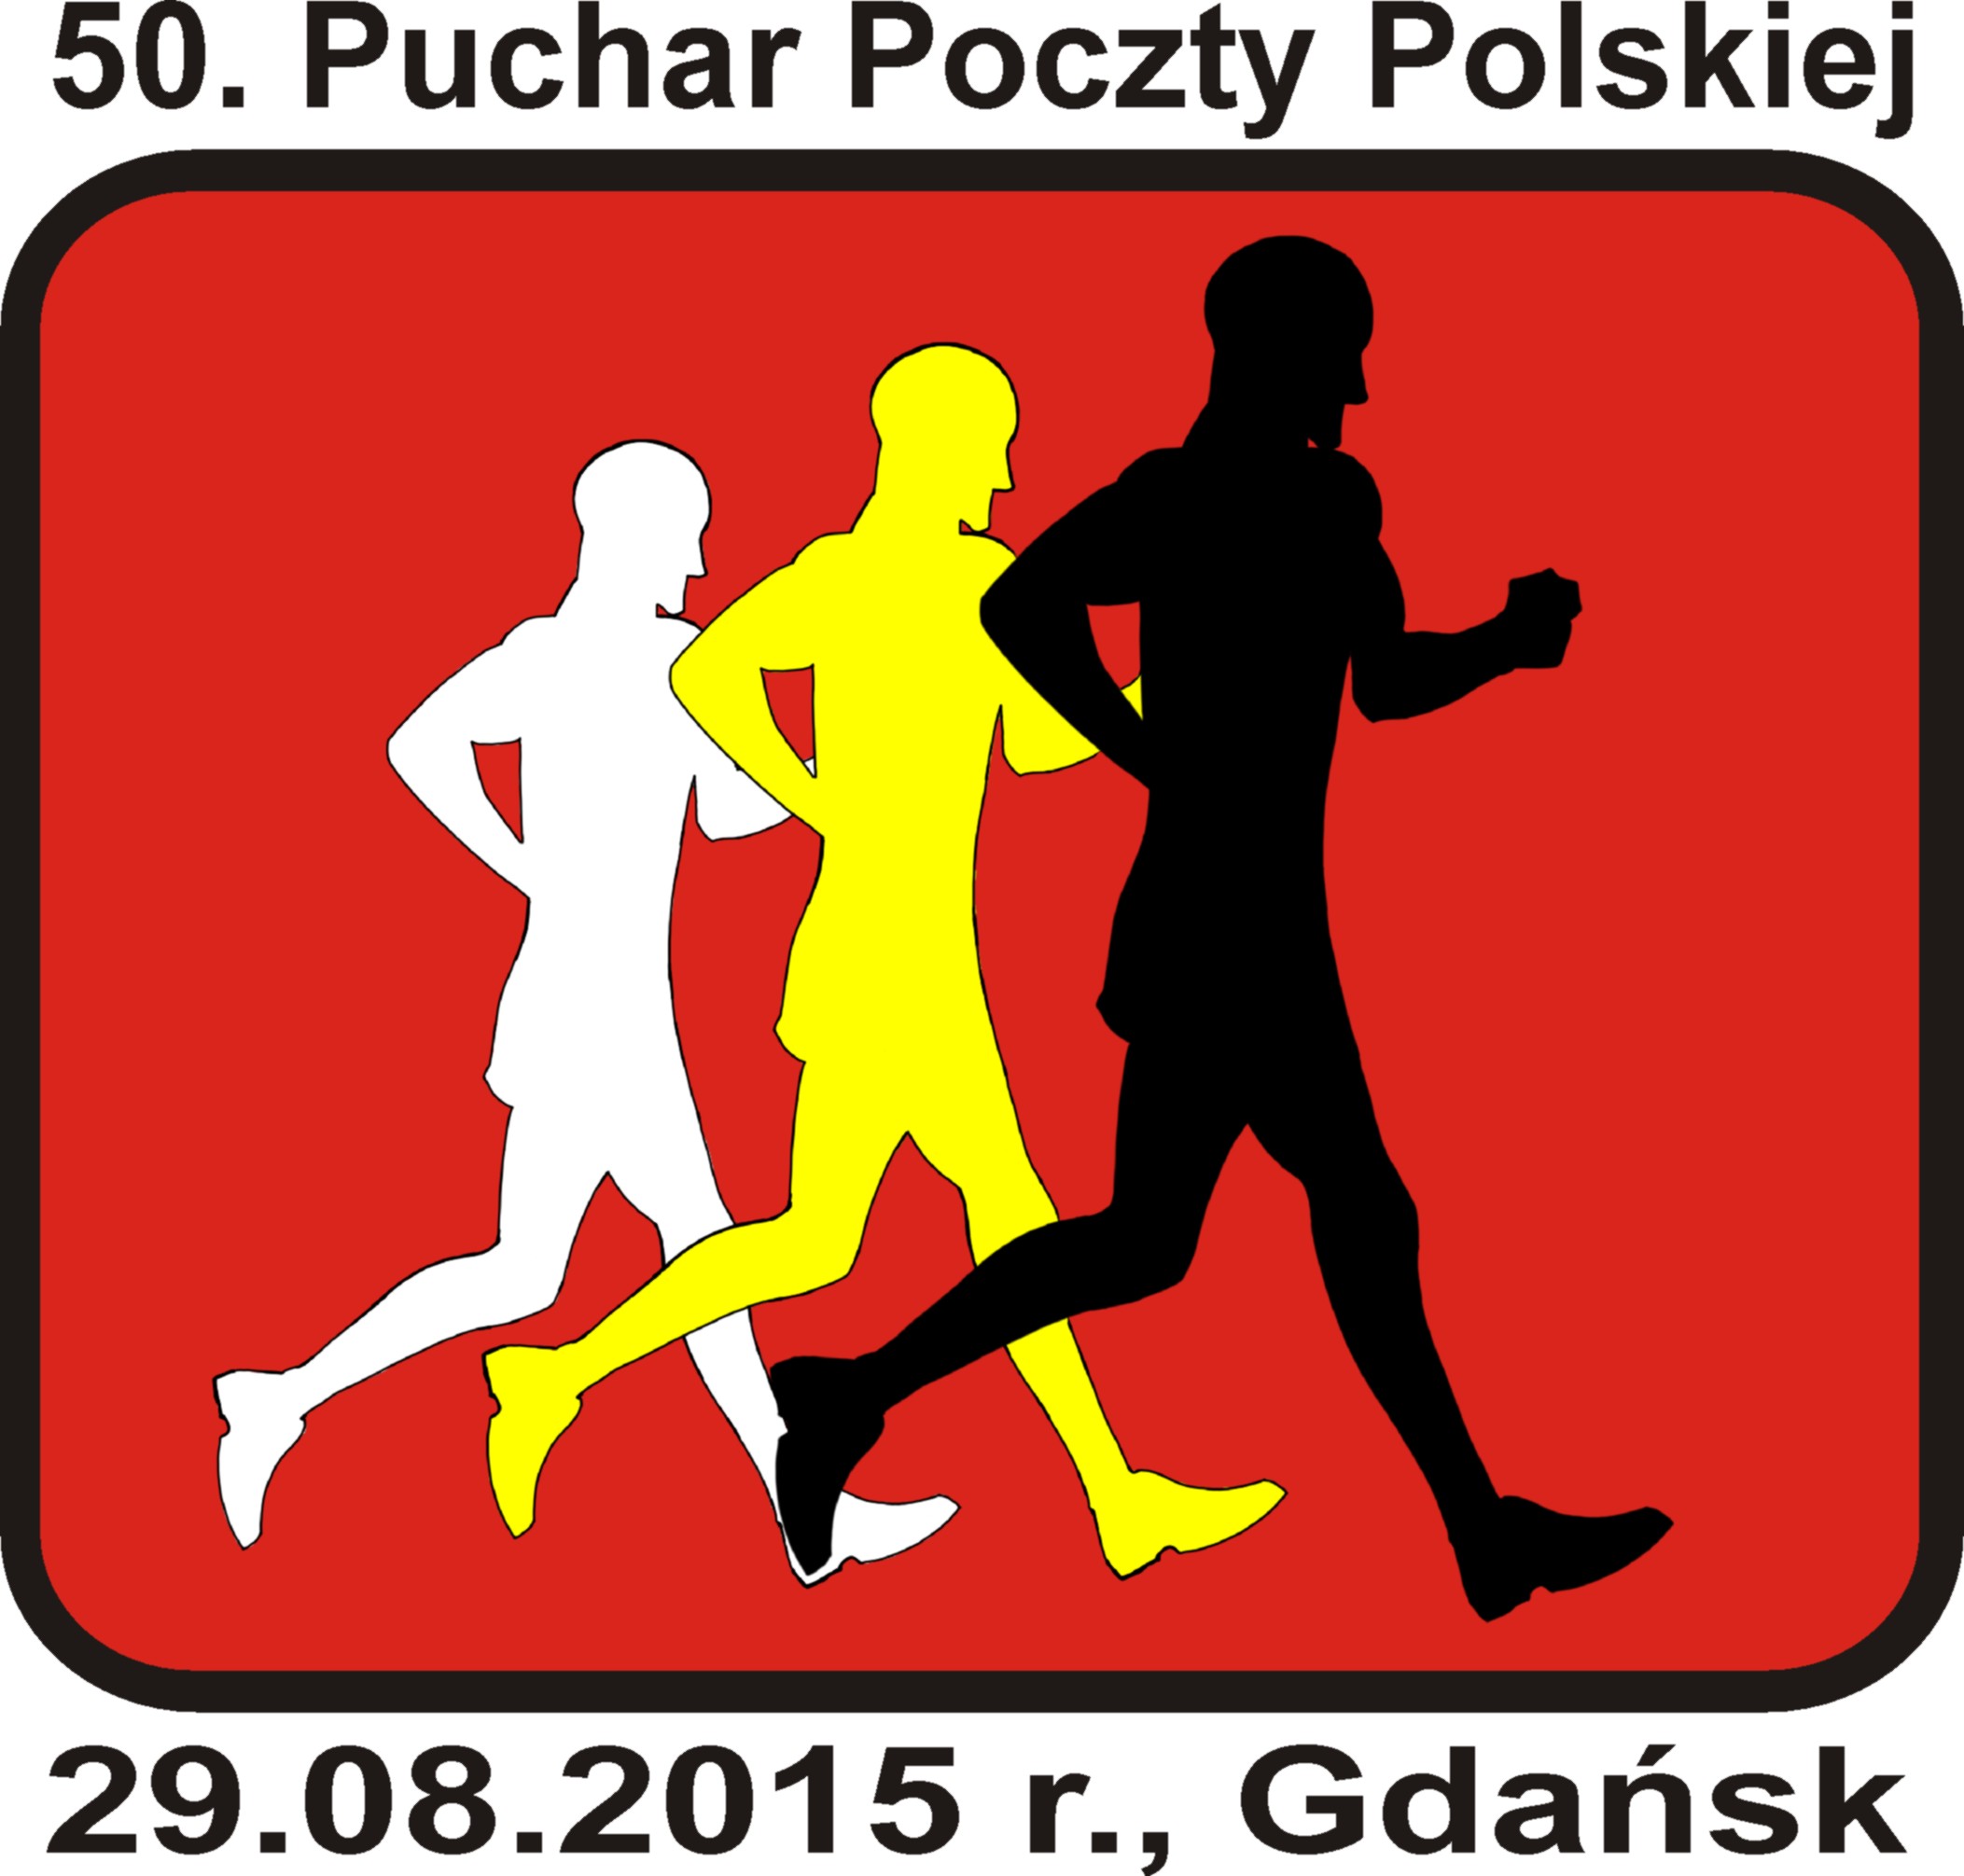 PPP2015 logo Puchar Poczty